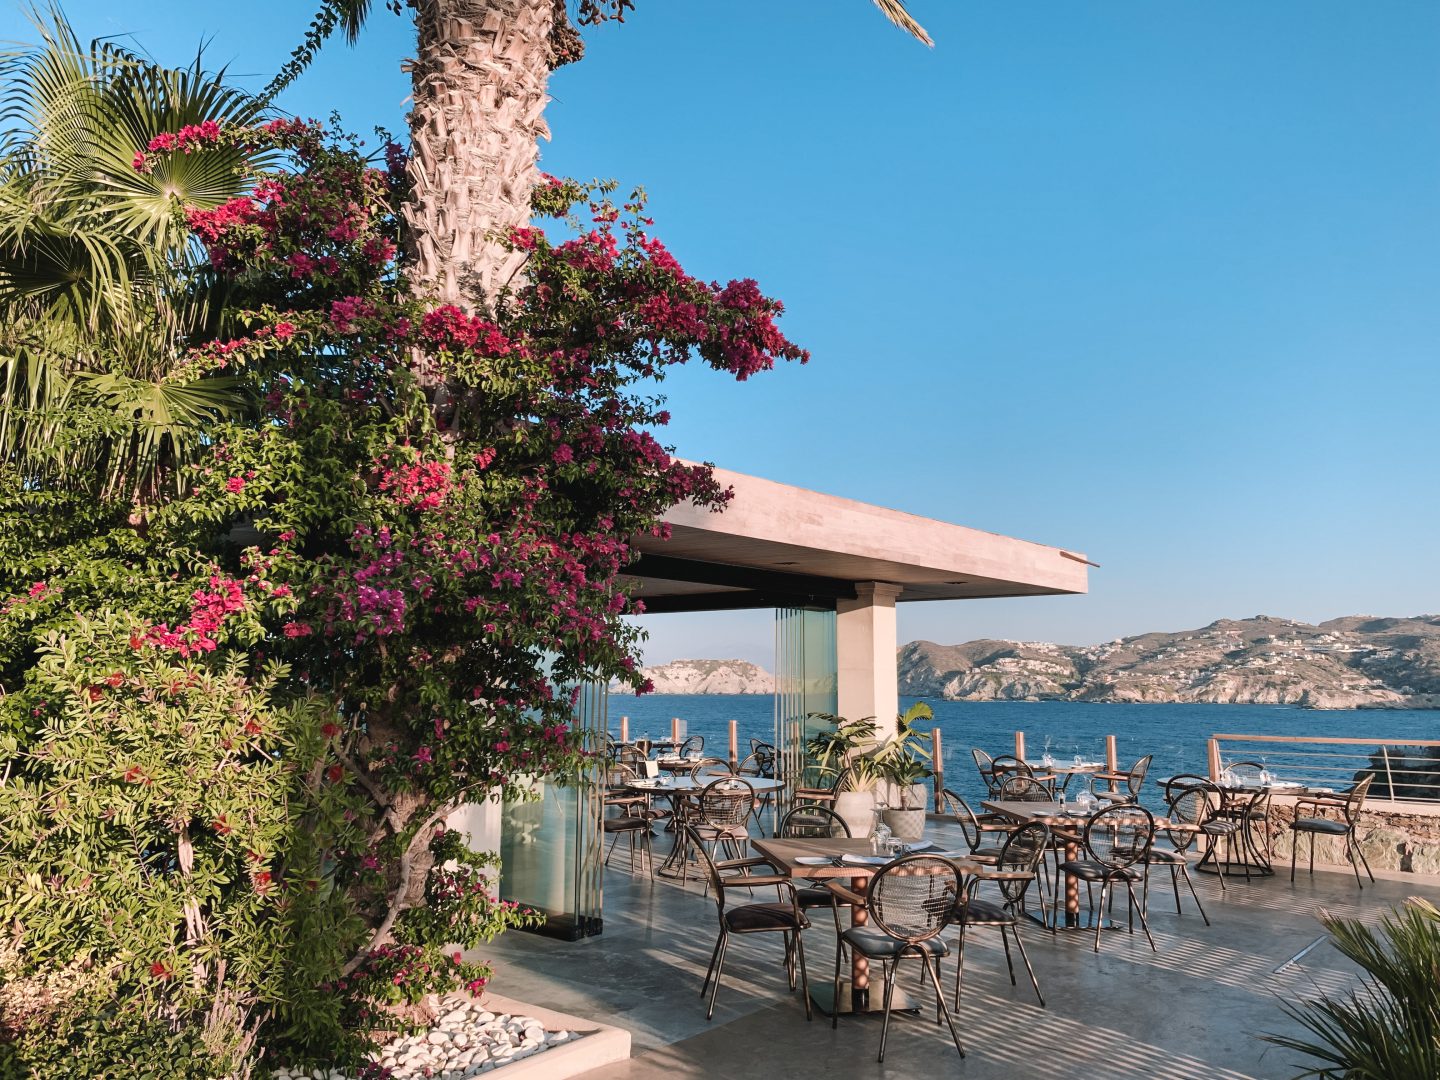 Jasmine Asian Restaurant, Sea Side Resort and Spa, Crete Greece